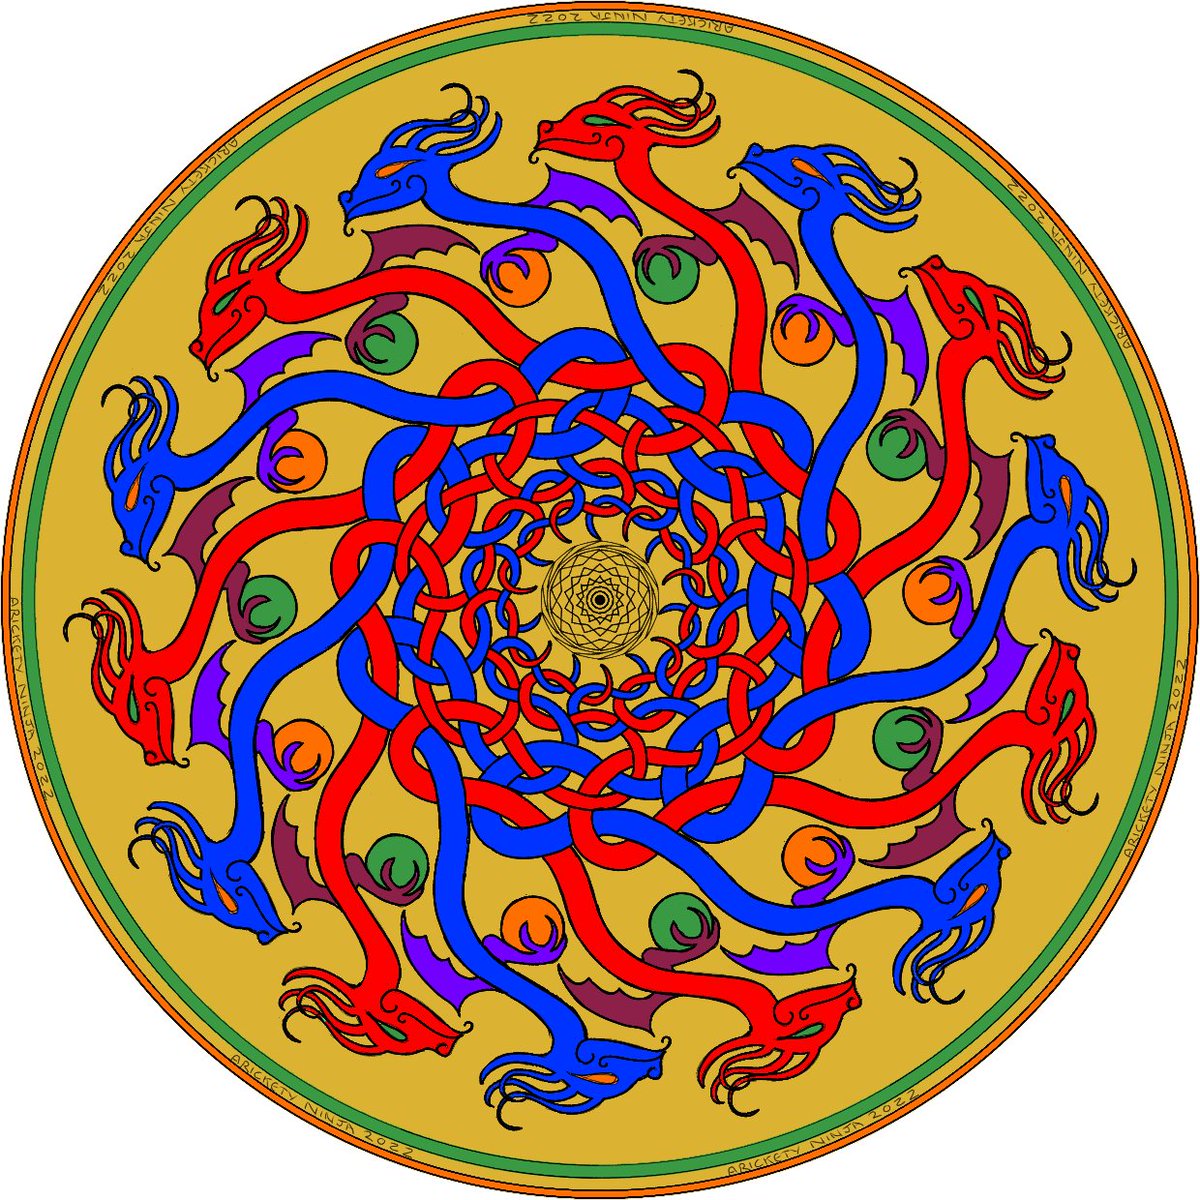 Knot Dragons Available NOW! This beautiful mandala features 14 dragons intertwined into an intricate knot pattern. teepublic.com/t-shirt/462004… #originalart #dragons #knotwork #celticknot #digitalartist #ArtistOnTwitter #ArtistOnX